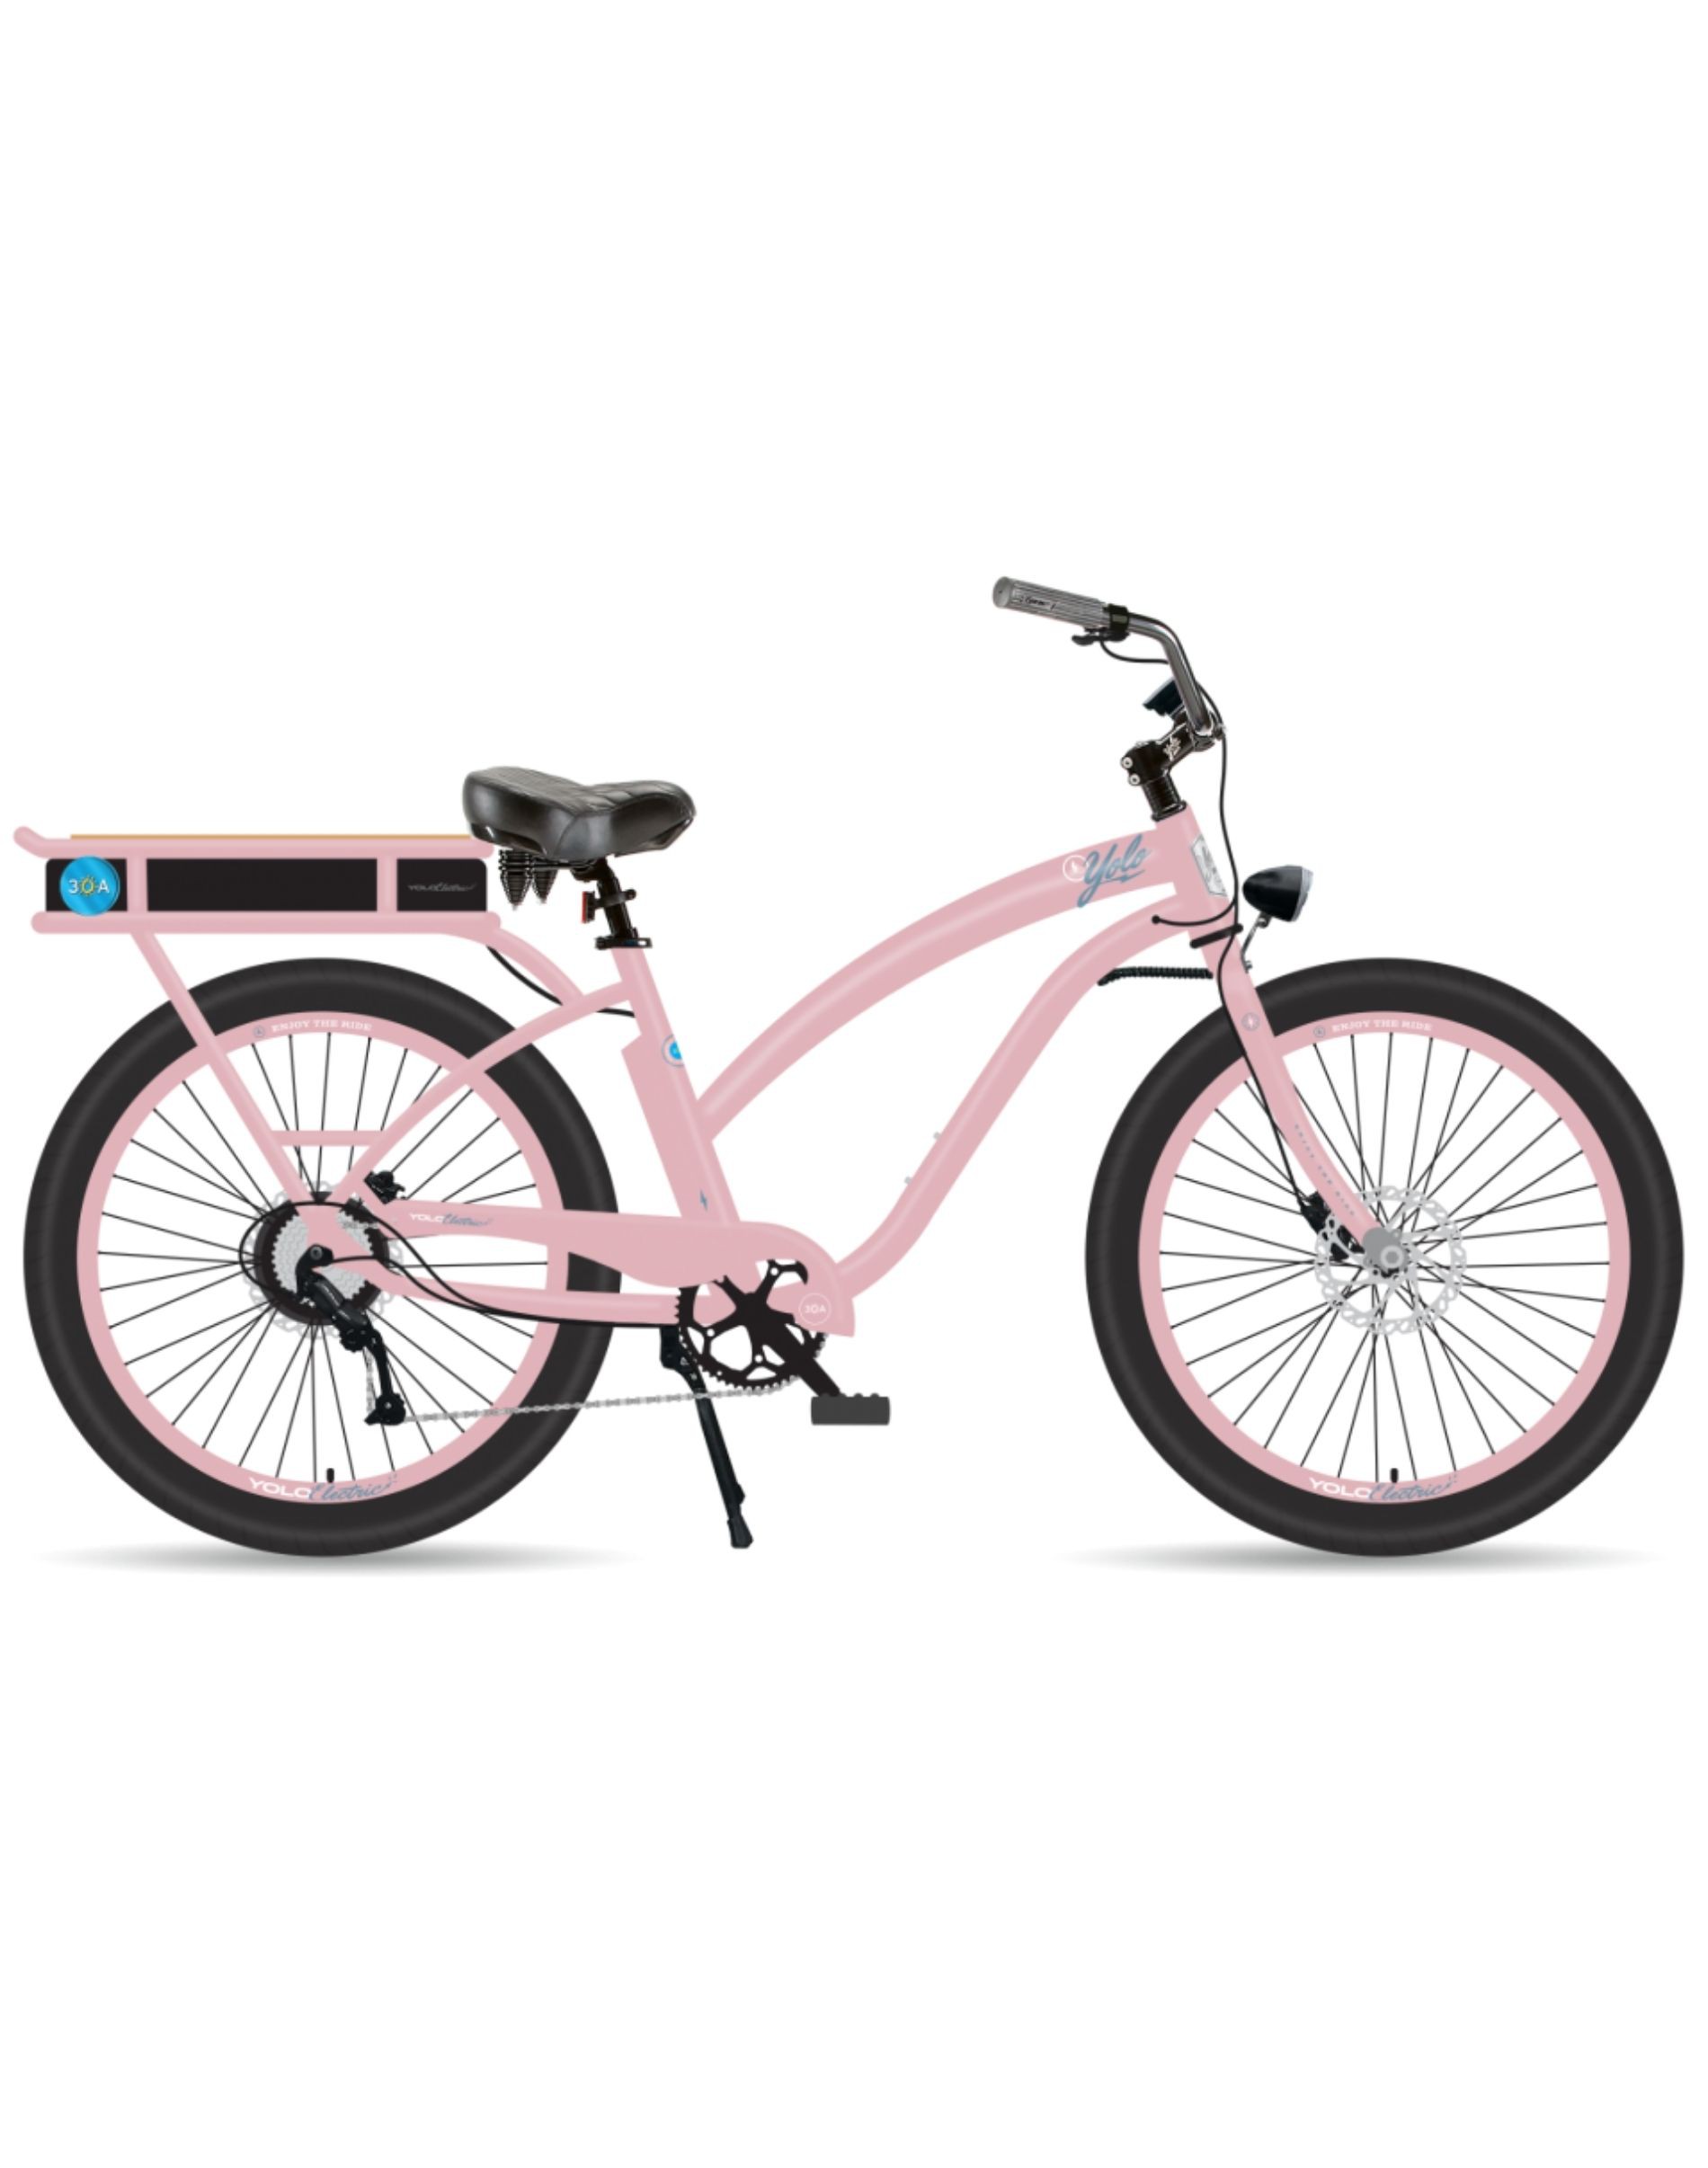 30A® Electric Bike by Yolo - Bubblegum Pink